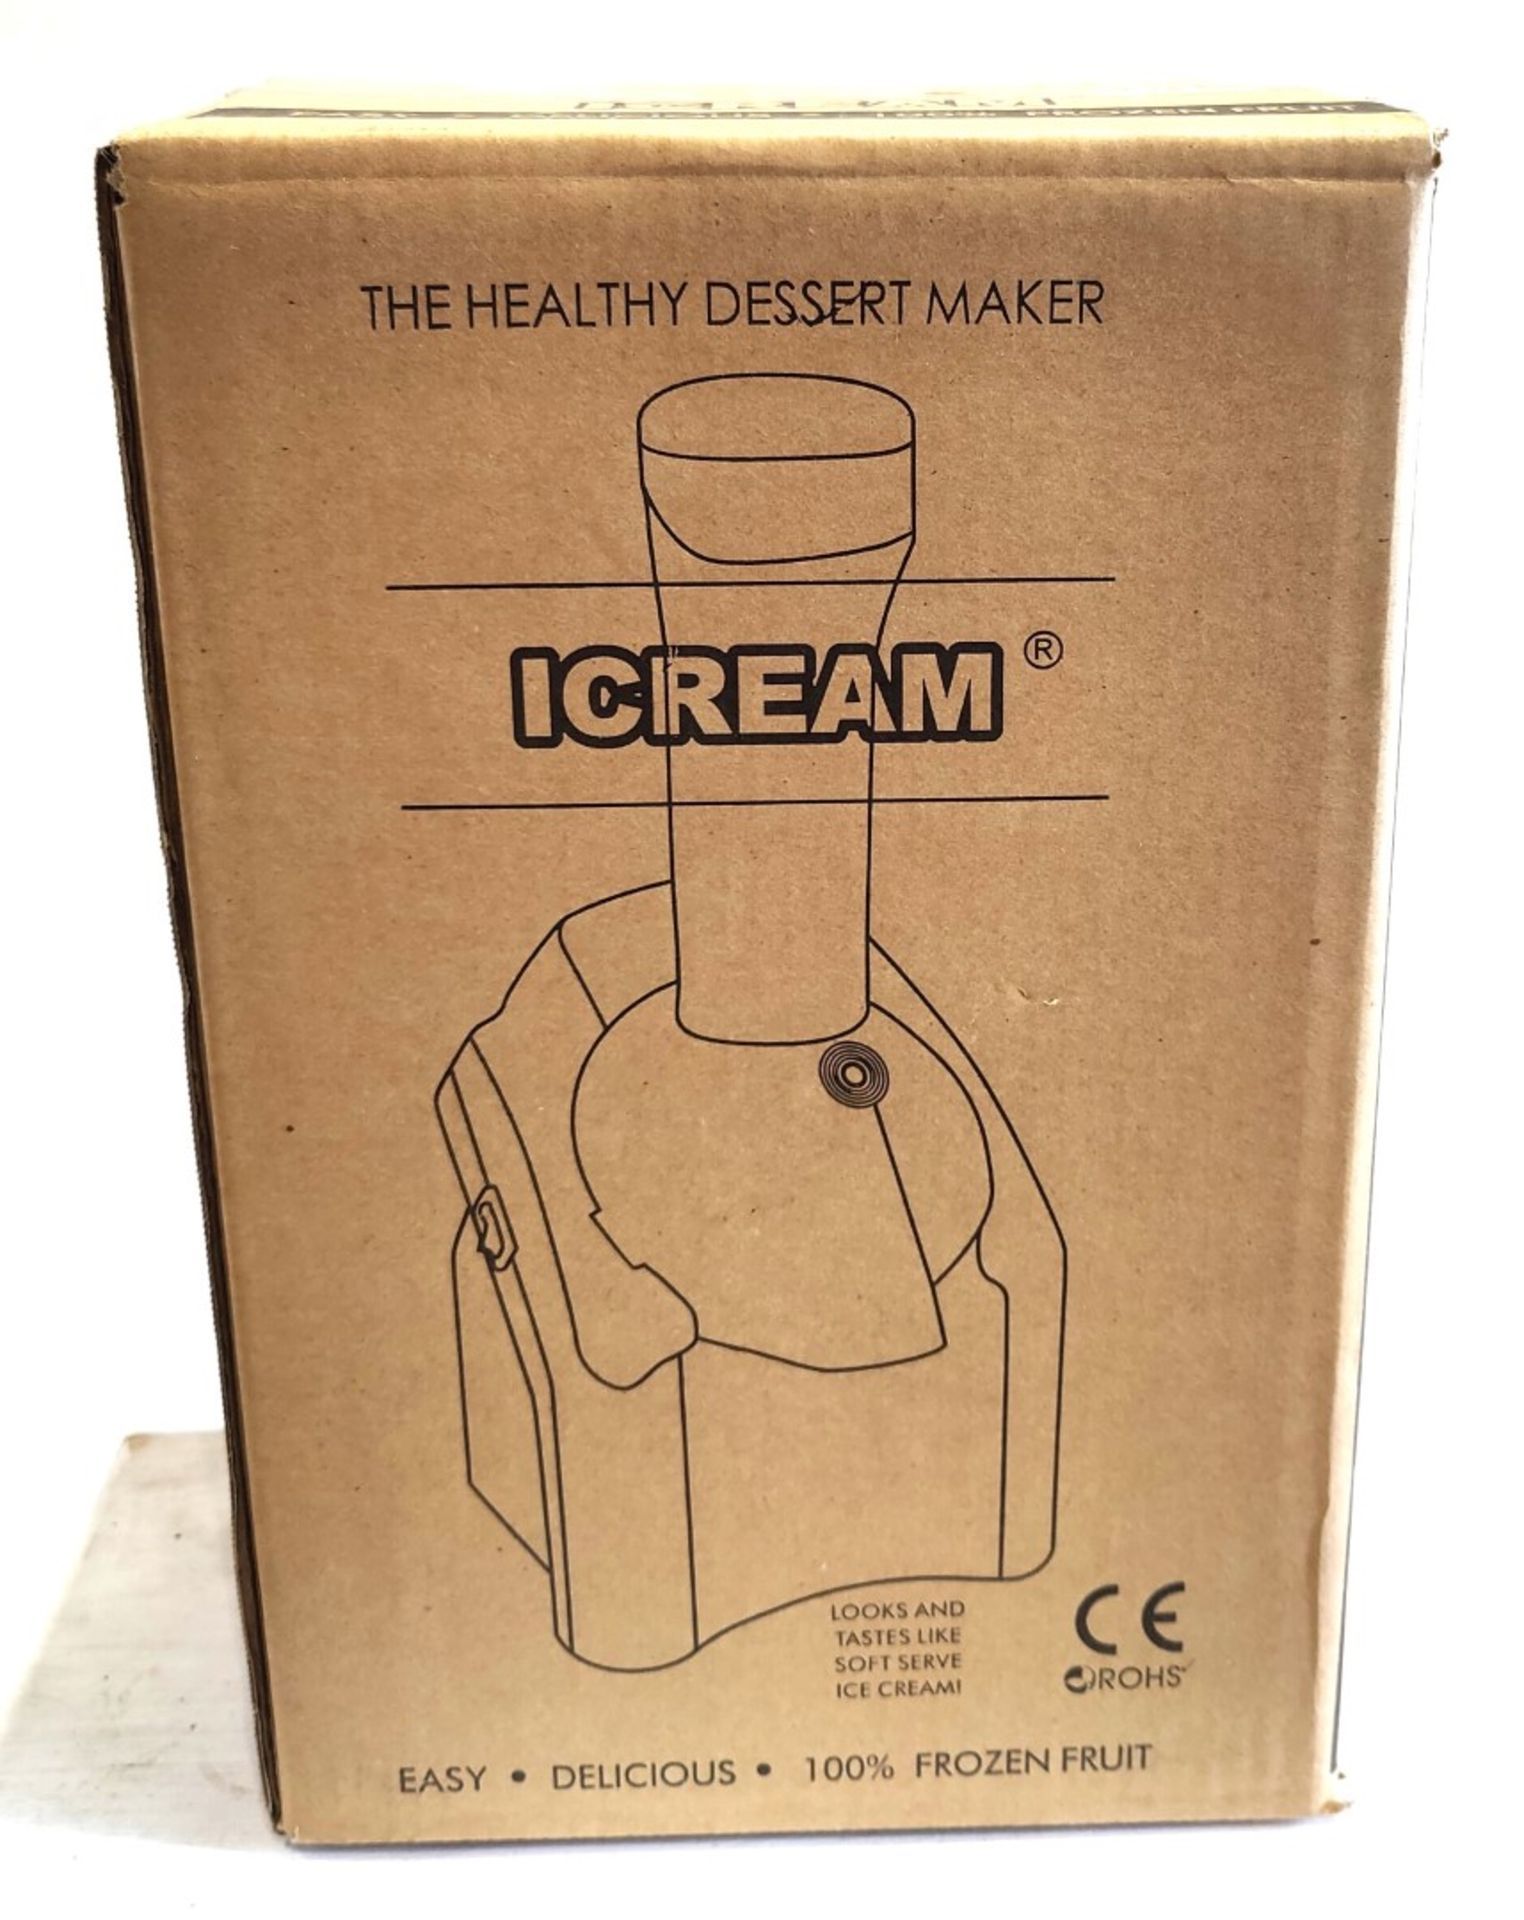 1 x Icream Healthy Desert Maker - Yogurt and Soft Ice Cream Home Appliance - 240v - Brand New - Image 7 of 12